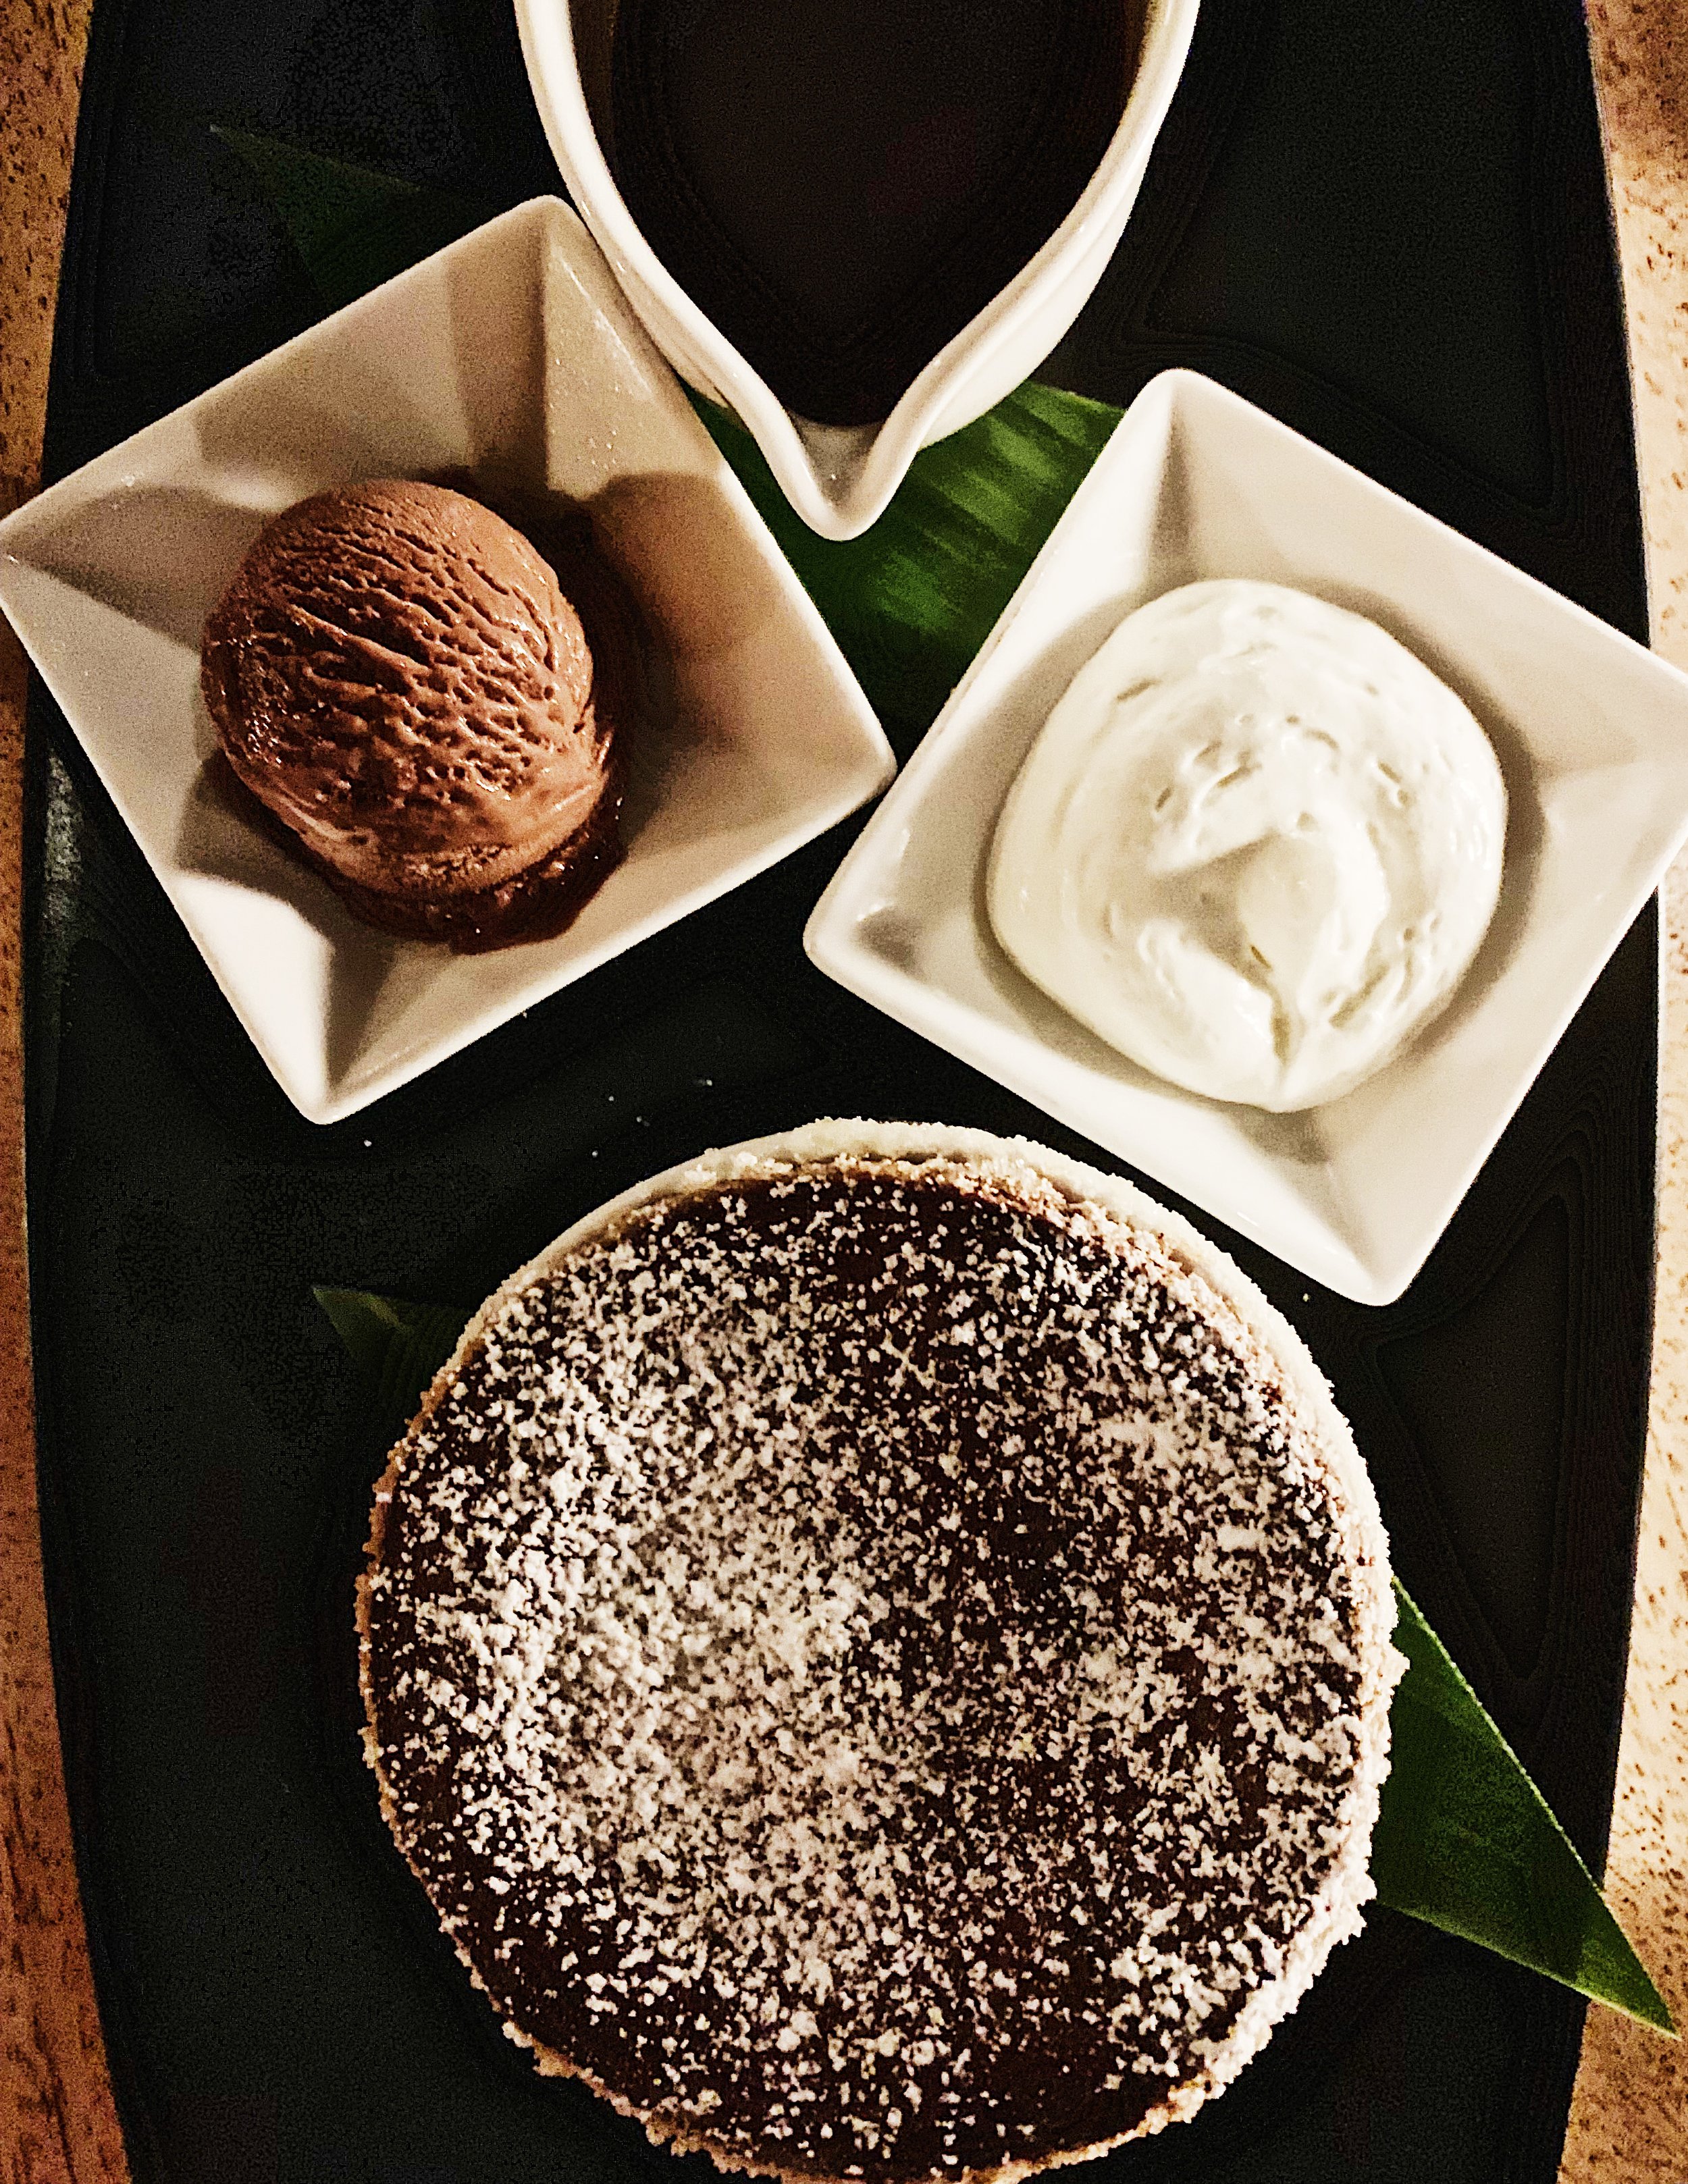 Chocolate Soufflé; Four Seasons Lanai, Hawaii